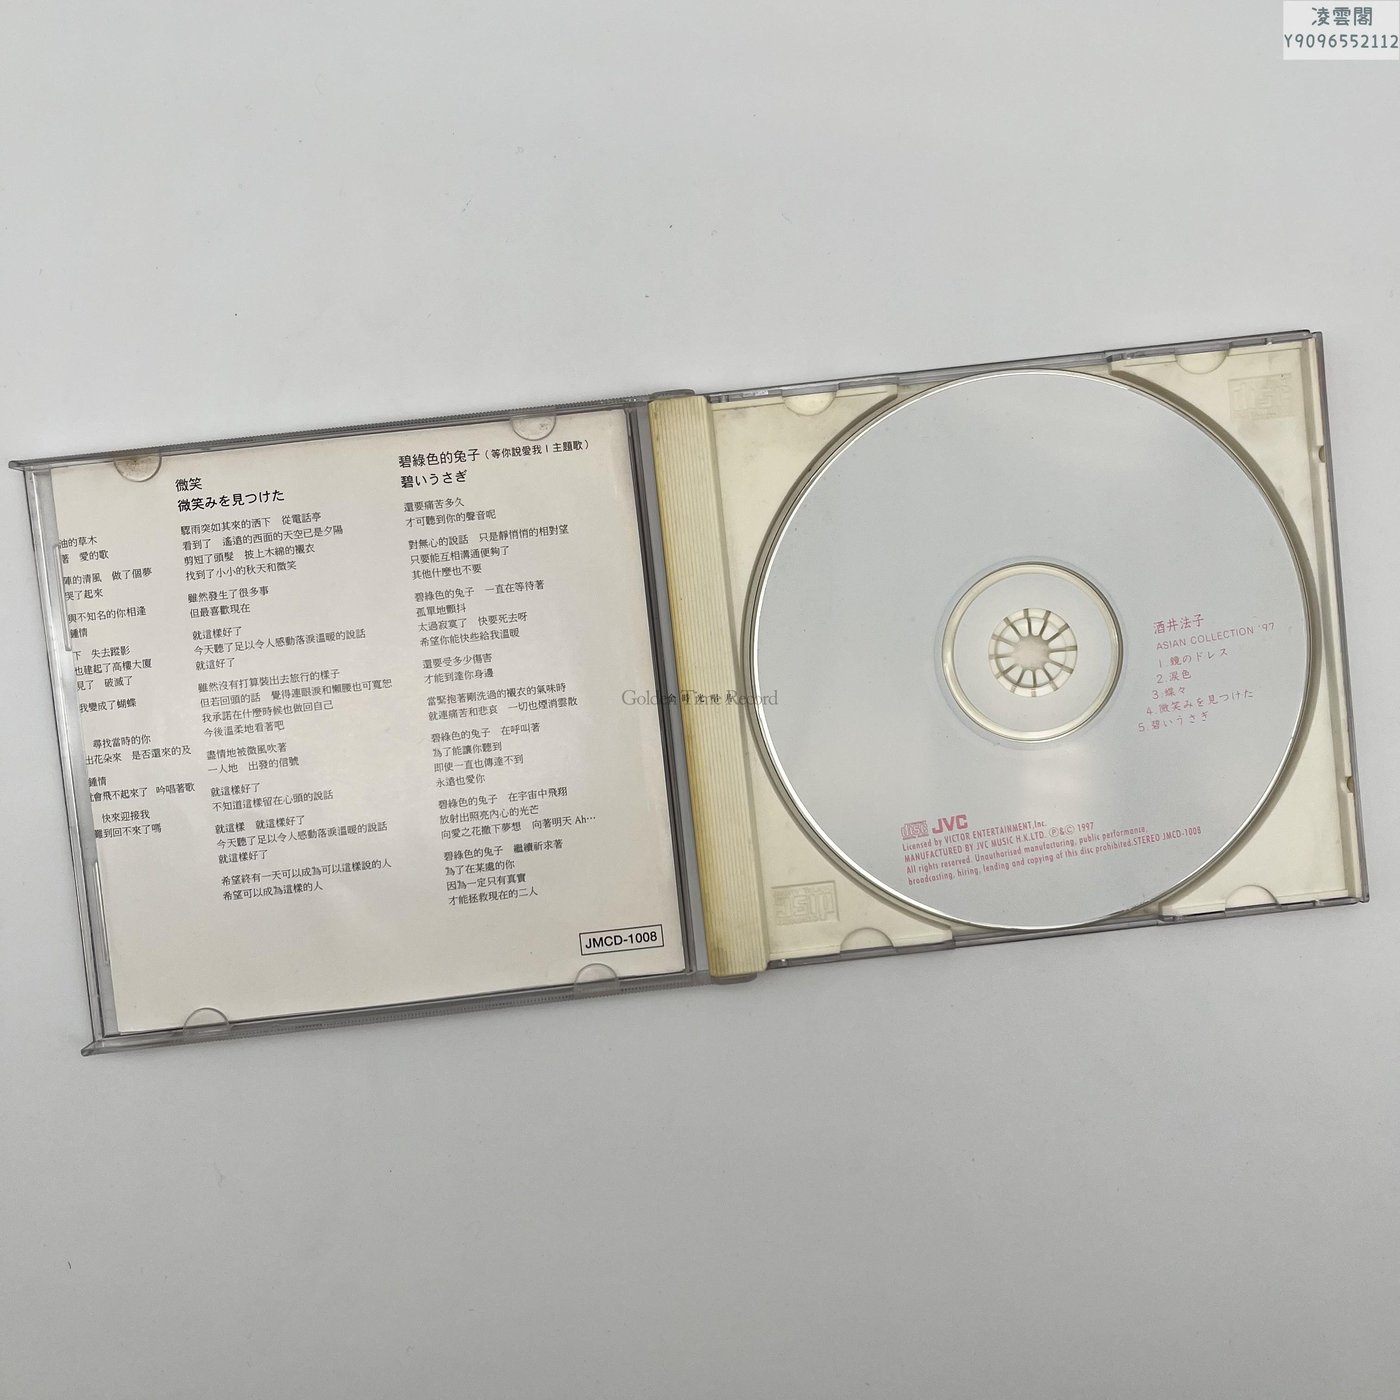 舊版酒井法子ASIAN COLLECTION'97 正版CD凌雲閣唱片| Yahoo 